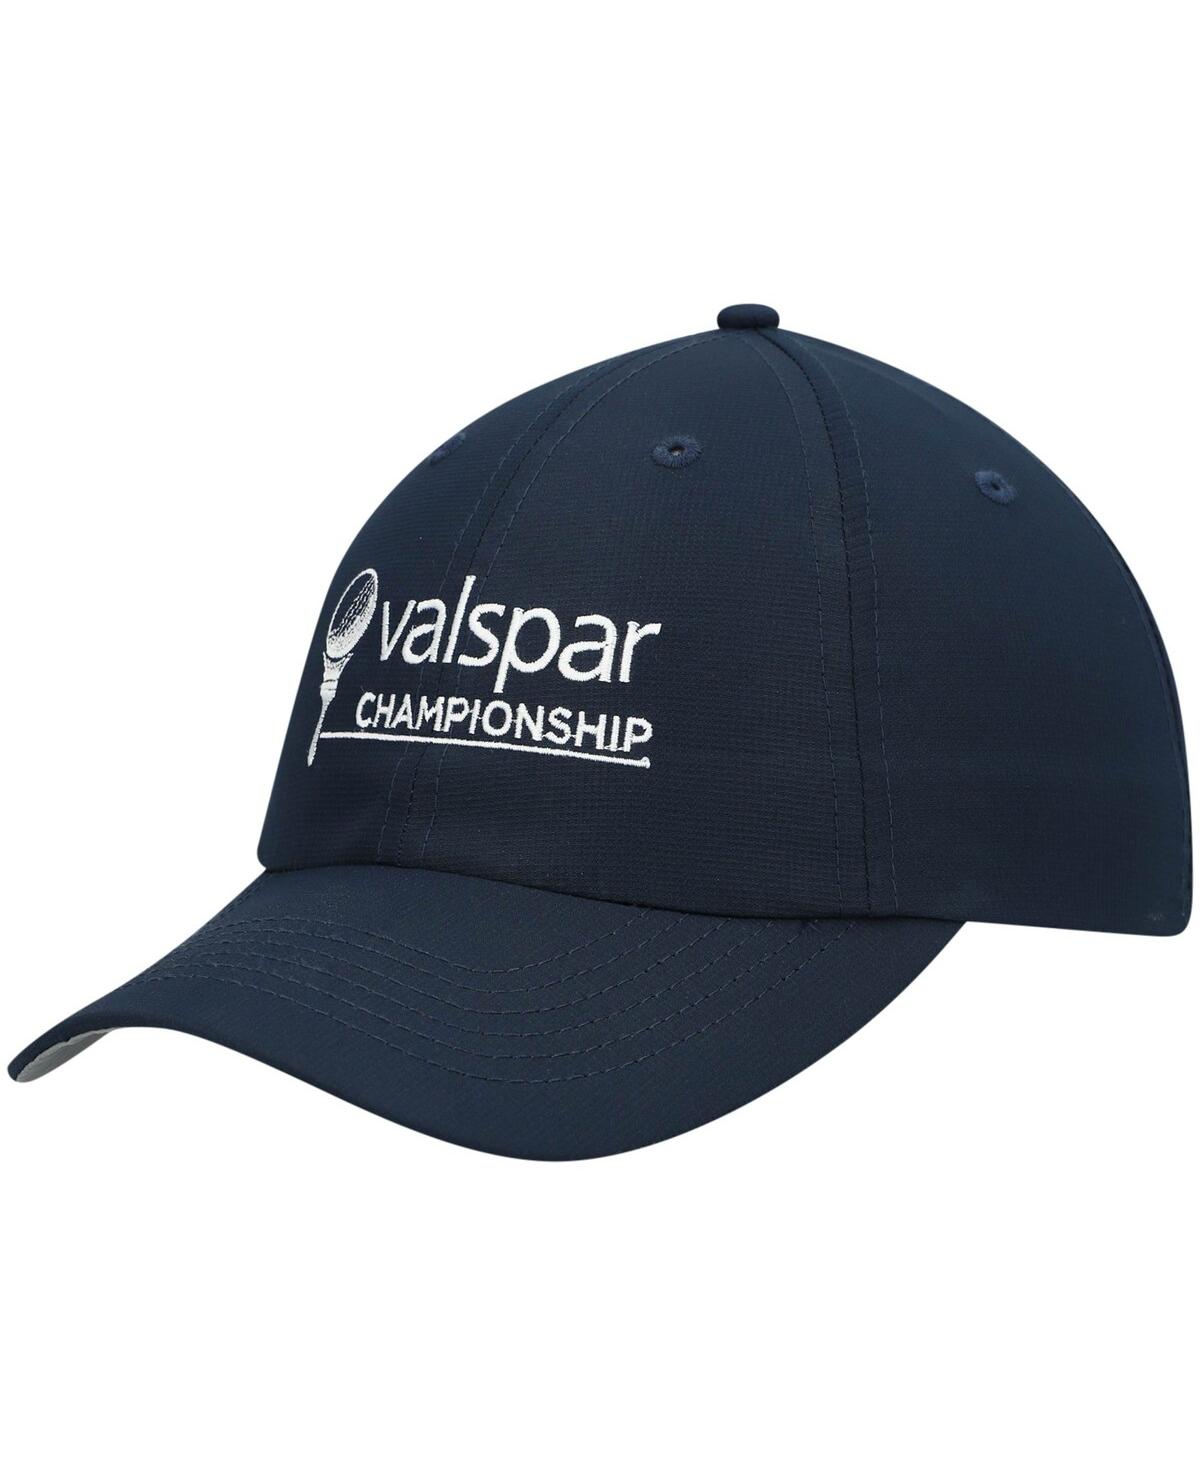 Women's Imperial Navy Valspar Championship Original Performance Adjustable Hat - Navy